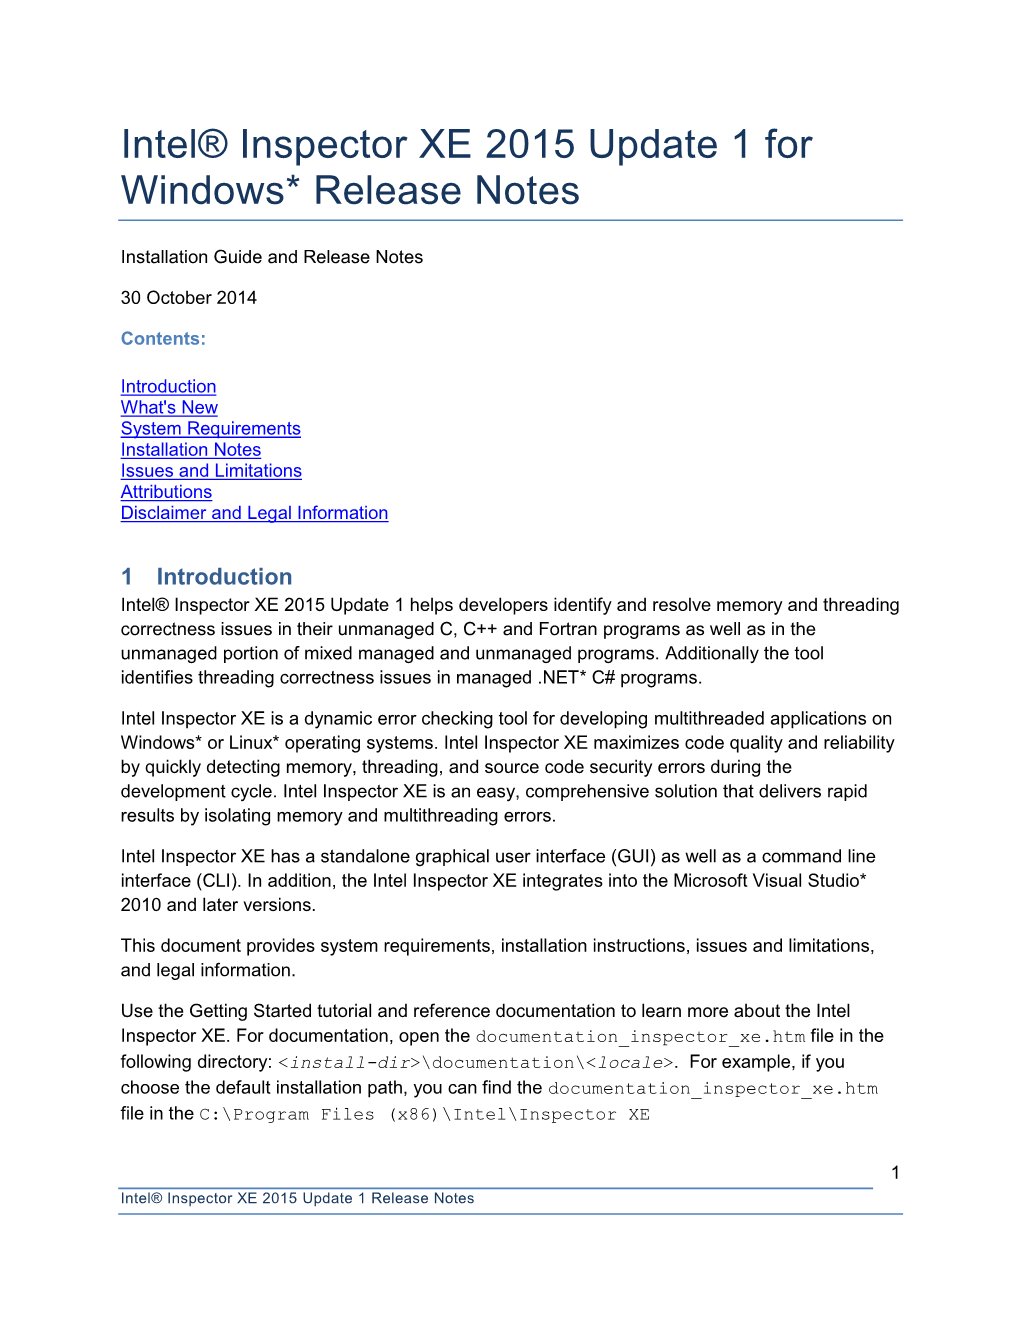 Intel® Inspector XE 2015 Release Notes for Windows* OS